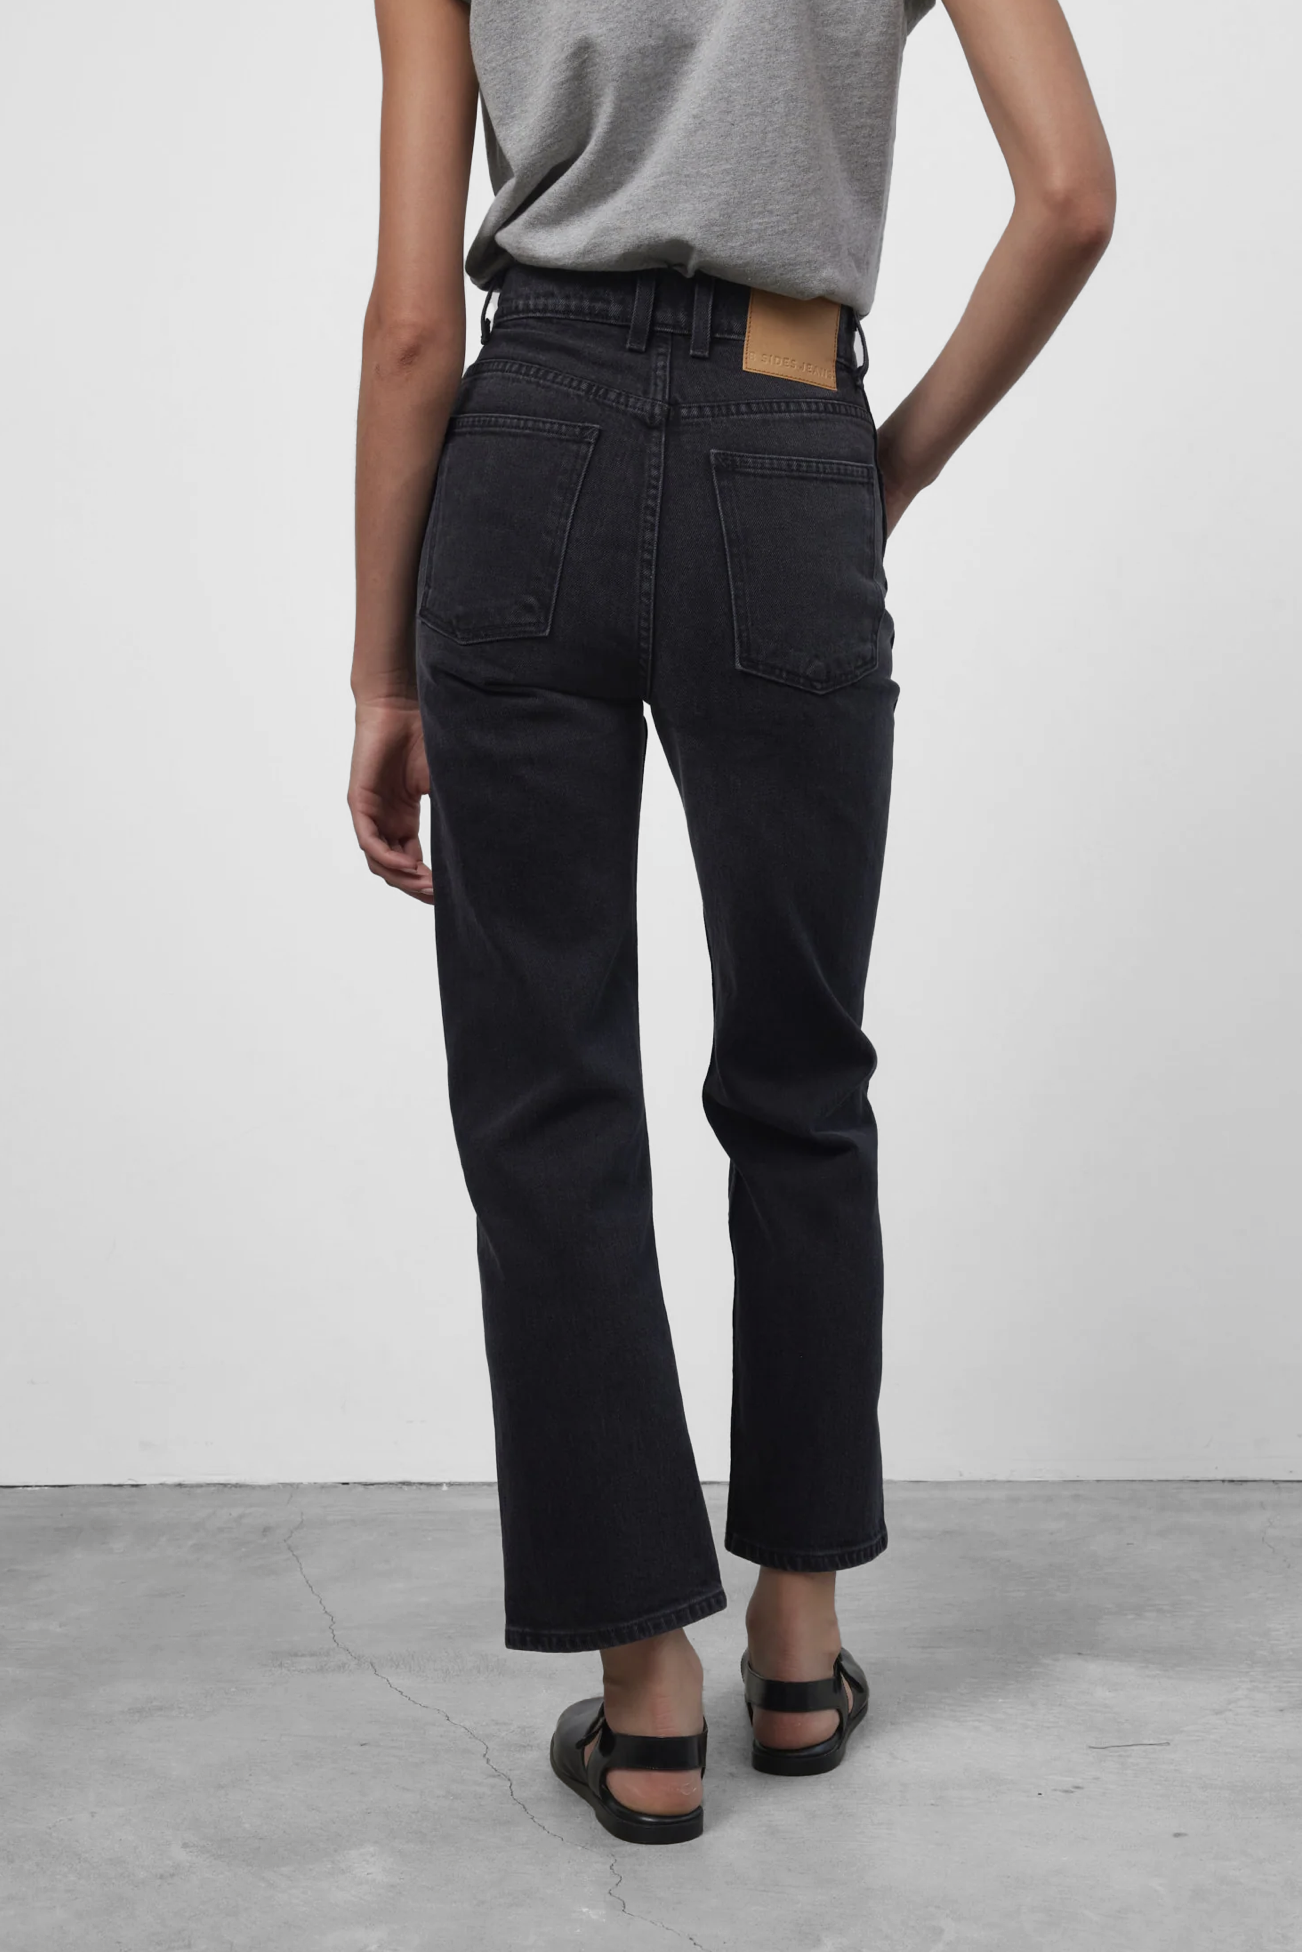 Plein Relaxed Straight Jean in Stil Black by B Sides http://www.shoprecital.com